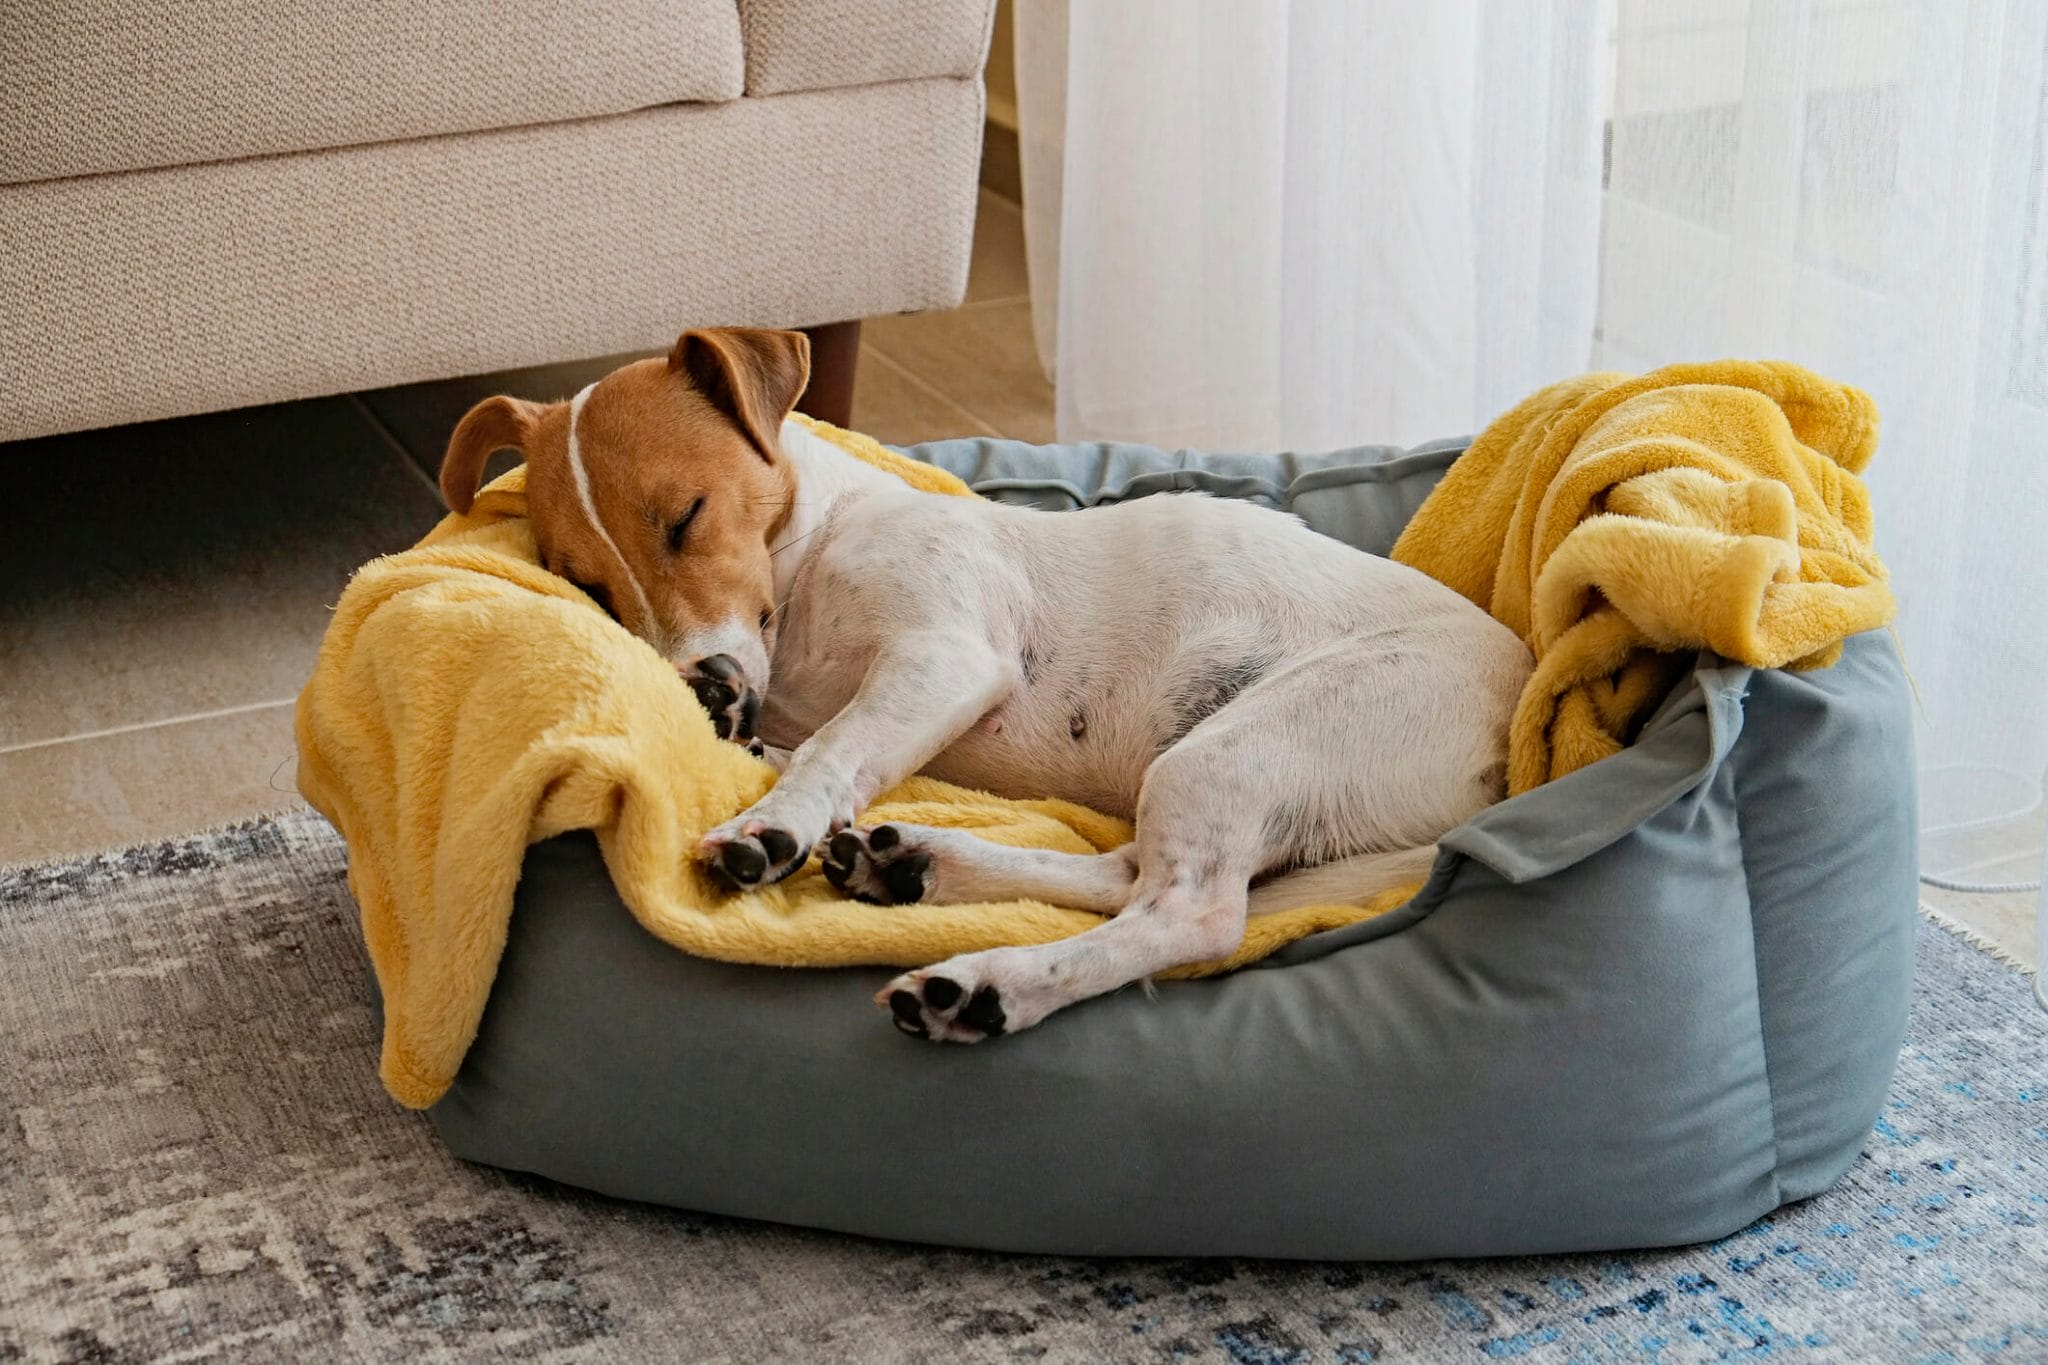 Best sleep aid for dogs